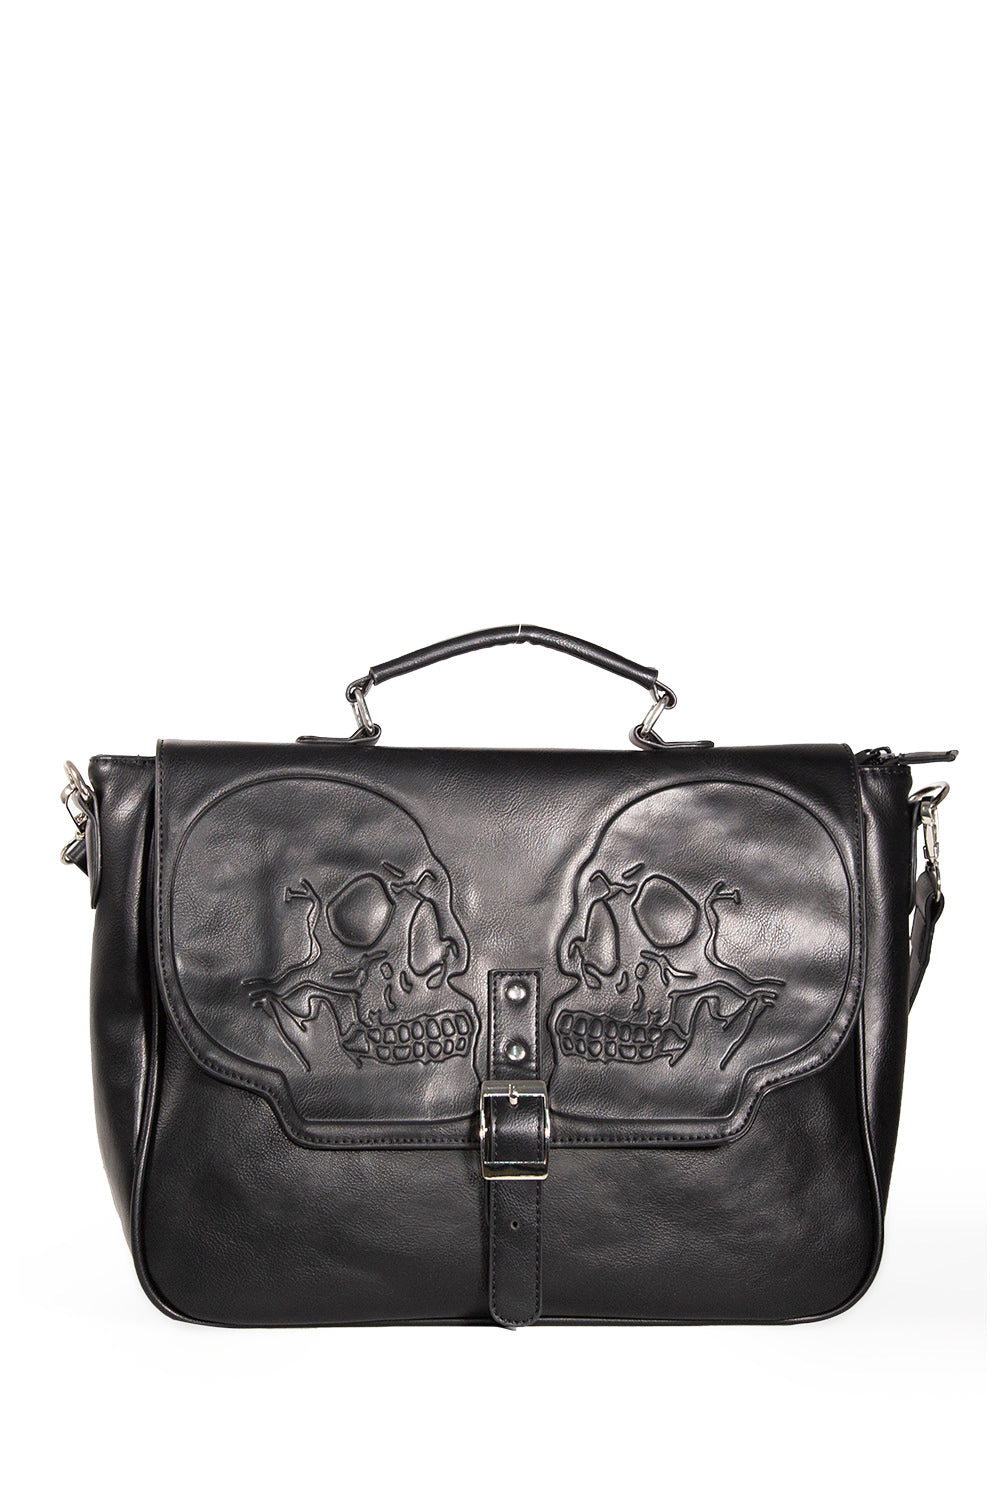 Black shoulder bag with two embossed skulls and buckle 